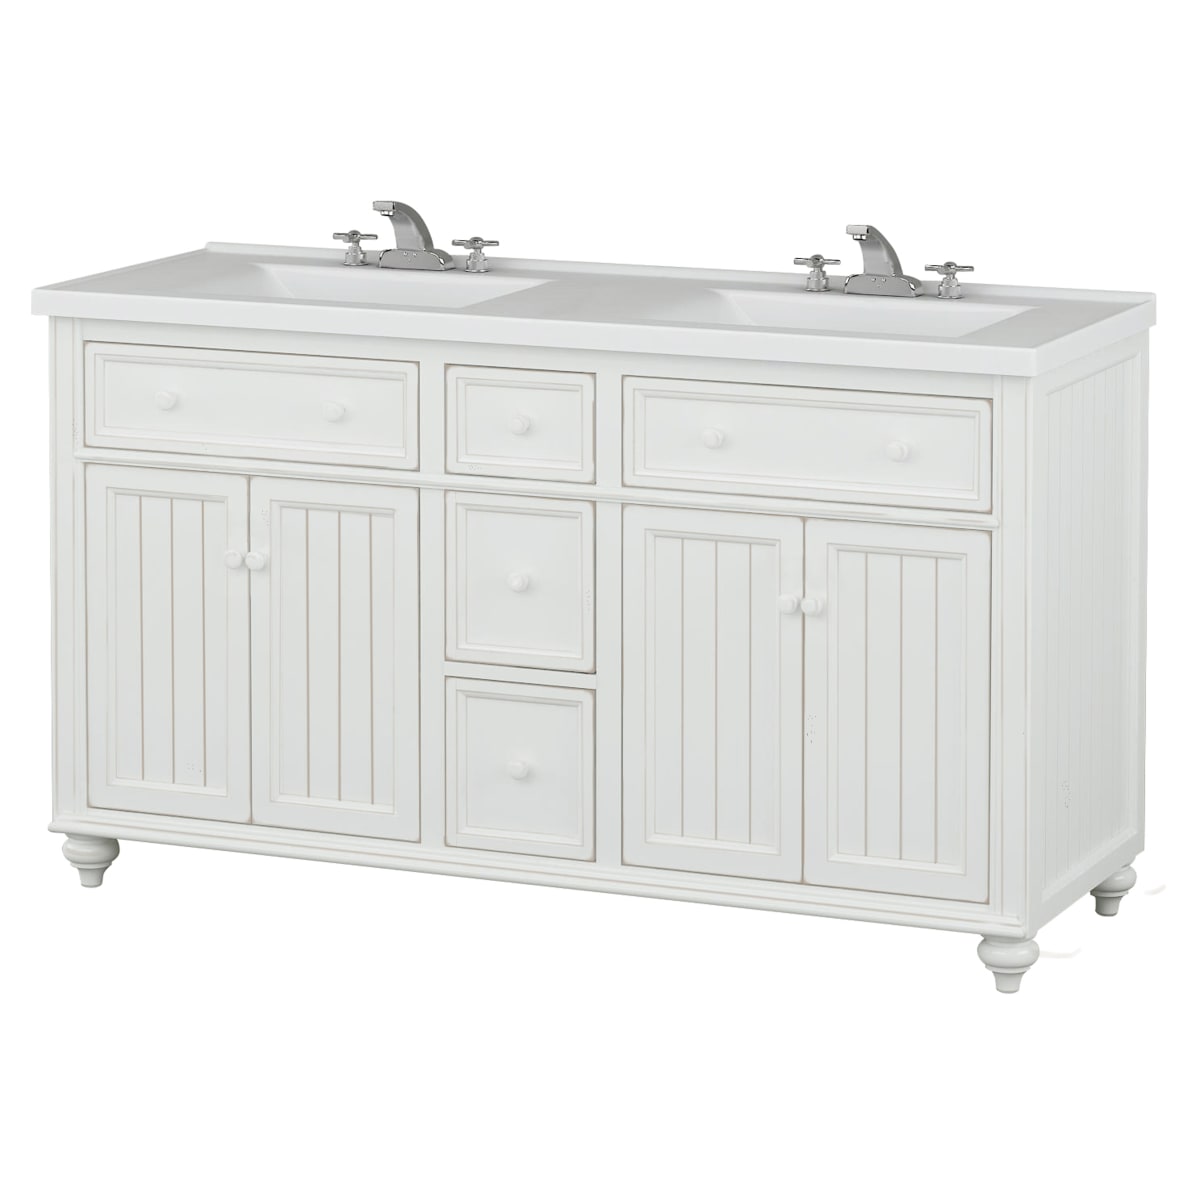 Sagehill Designs Cr6021dn Designer, Bath Vanity Cabinets Only